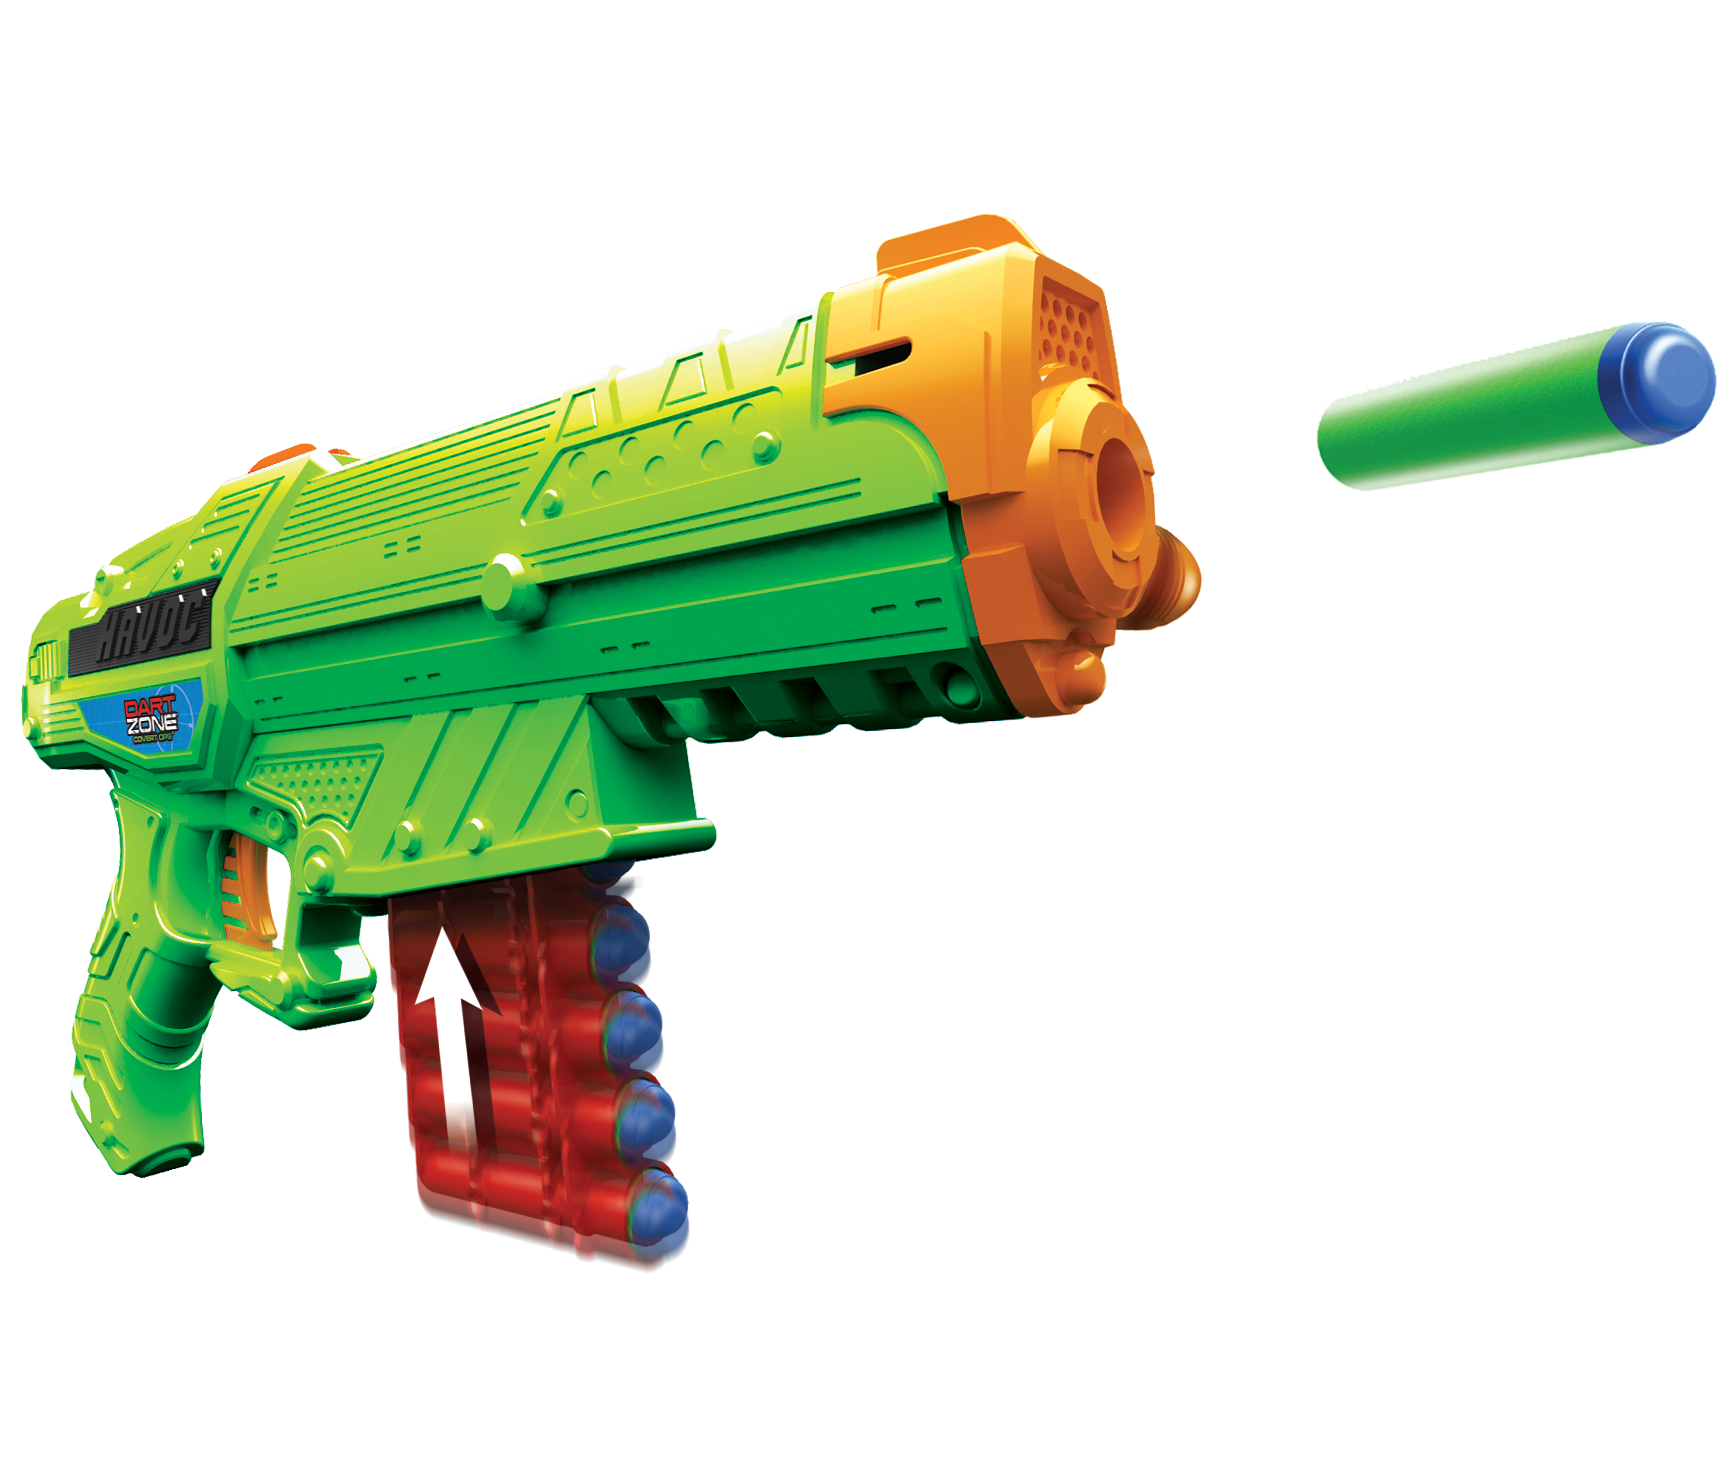 Toy Force Blaster Weapon Enforcer Adventure Nstrike PNG Image